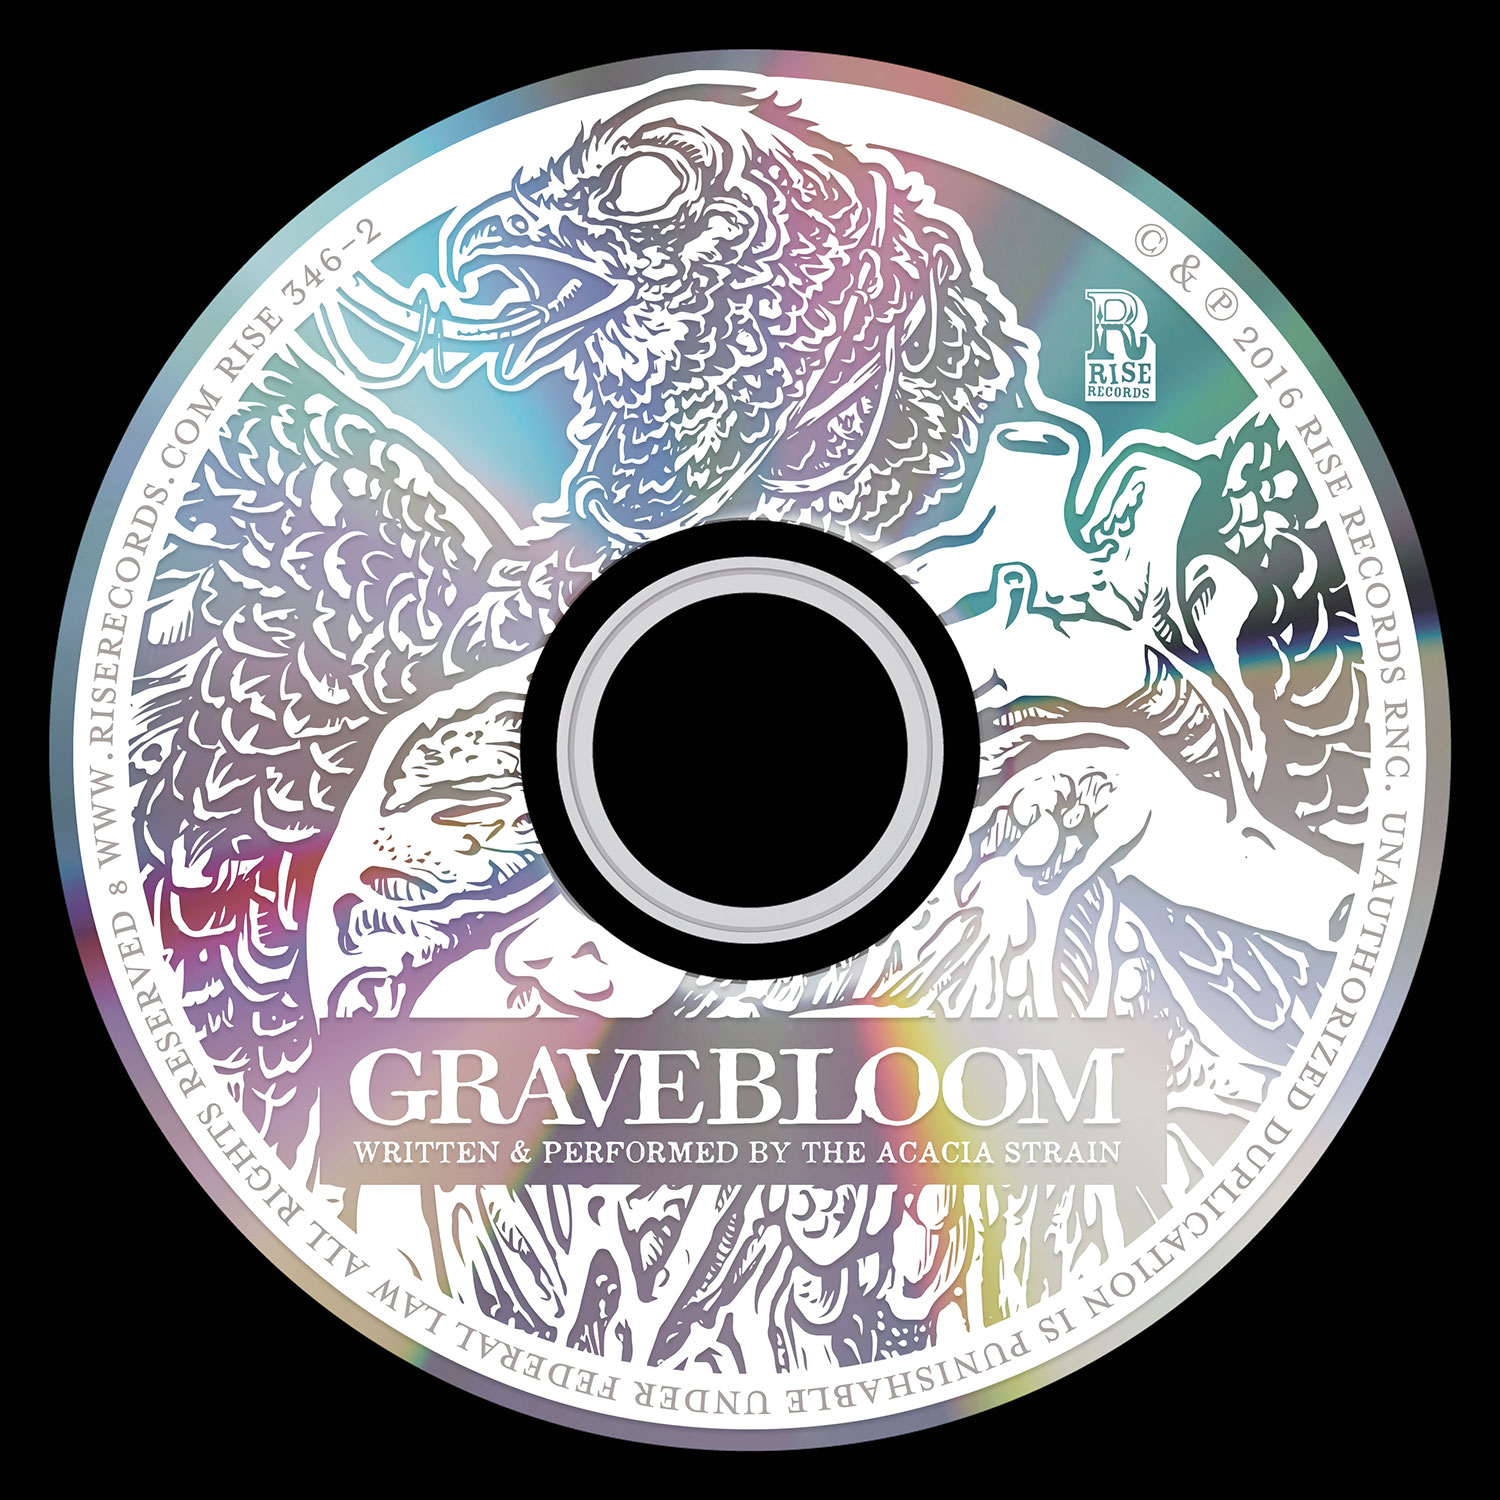 Disc art for Gravebloom